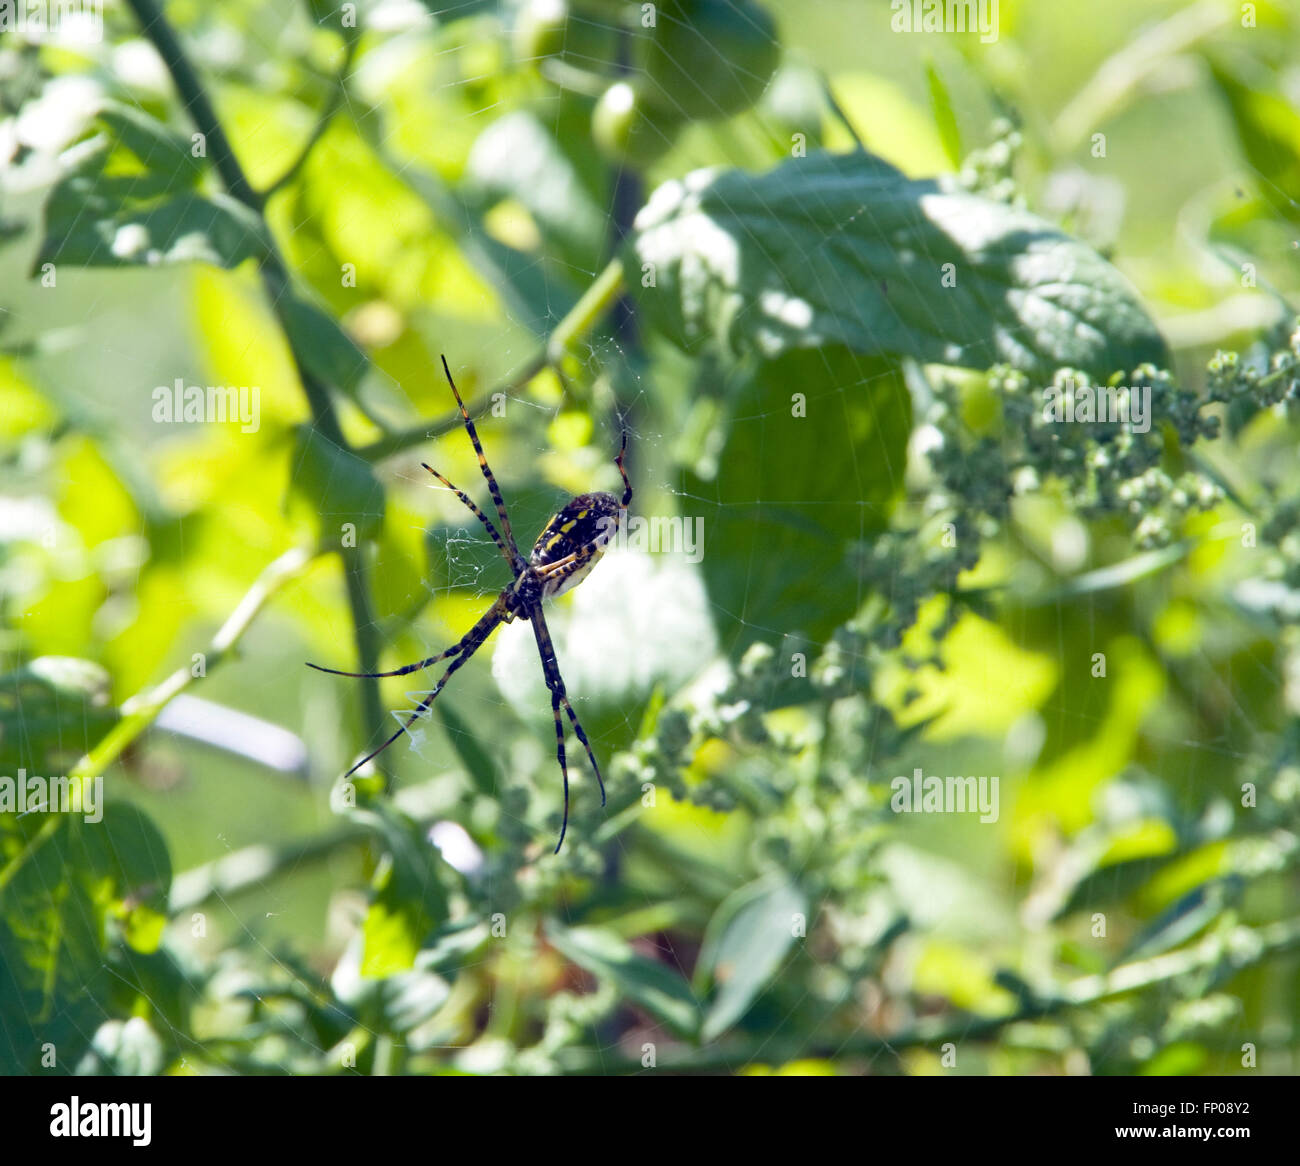 Female Black and Yellow Garden Spider, Argiope aurantia Stock Photo